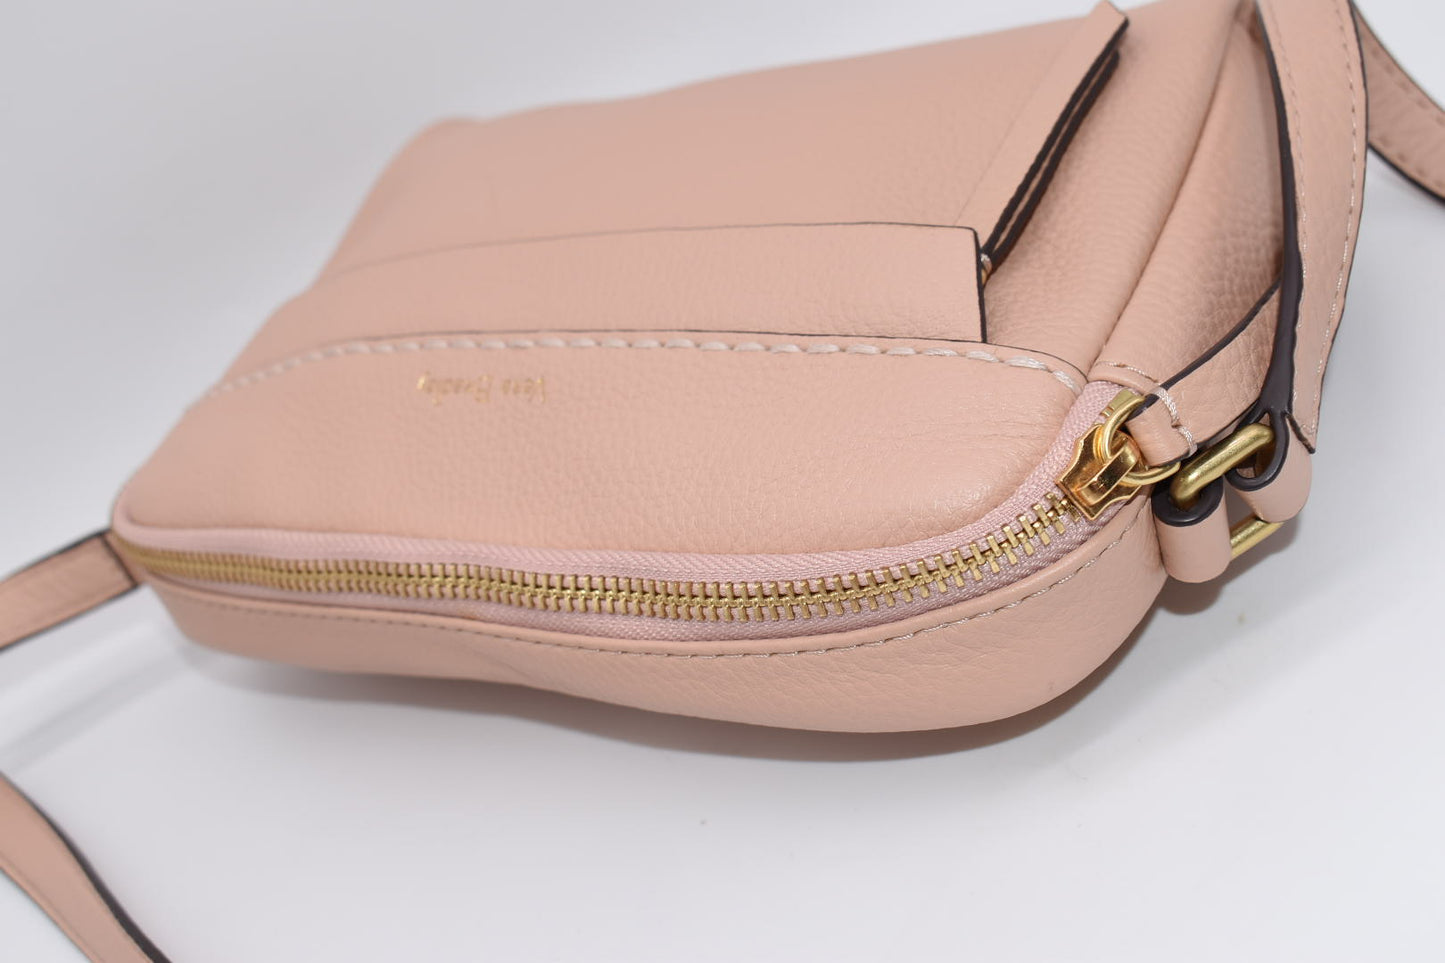 Vera Bradley RFID Mallory Petite Leather Crossbody in "Pink Sands"